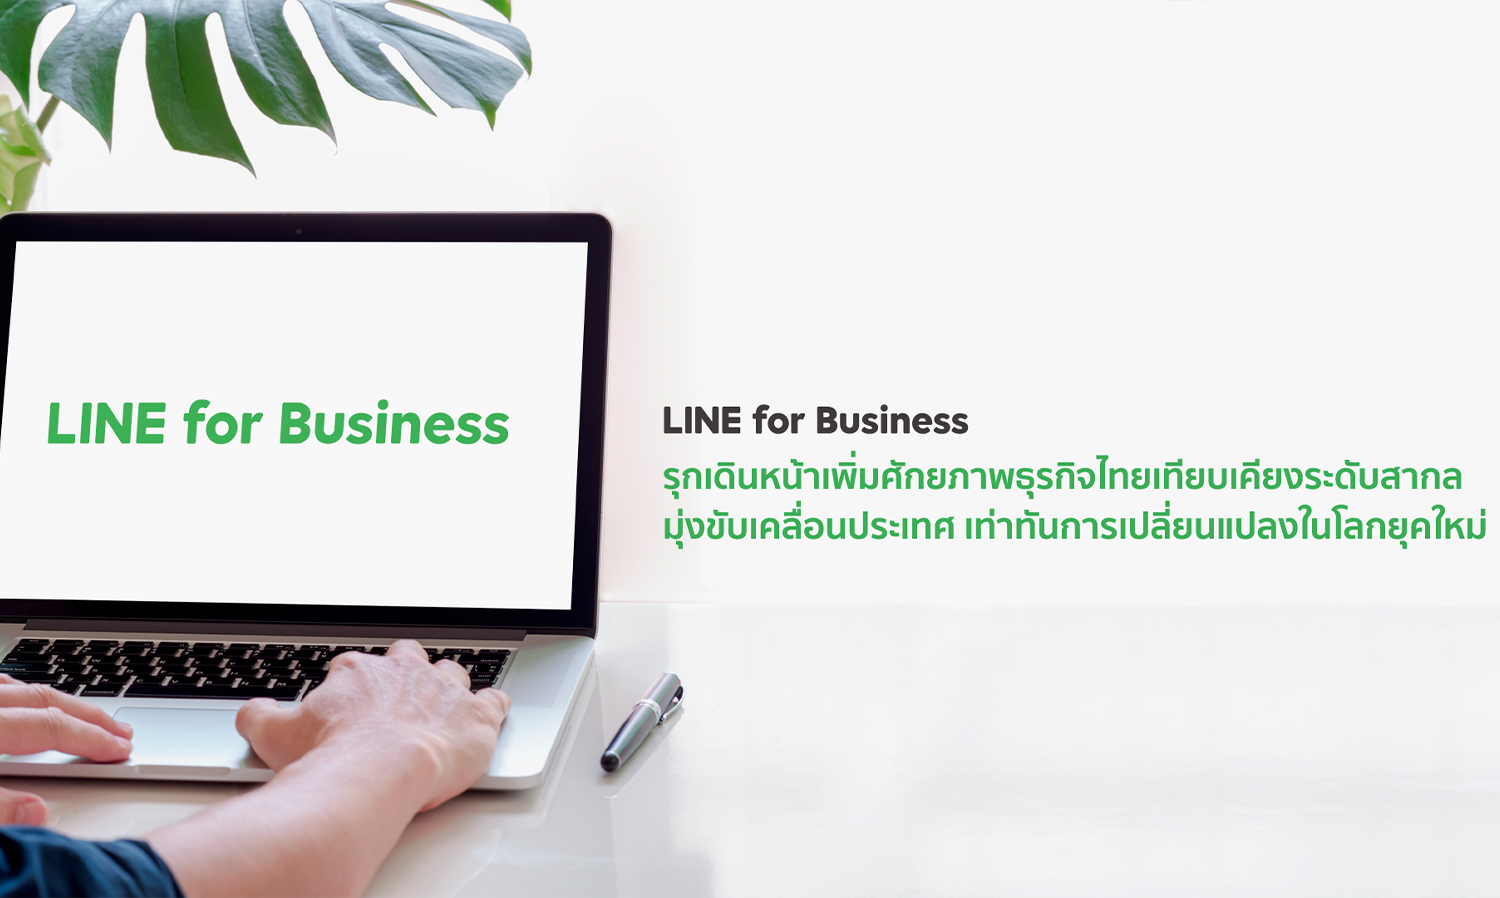 LINE for Business รุกเดินหน้าเพิ่มศักยภาพธุรกิจไทย เทียบเคียงระดับสากล  มุ่งขับเคลื่อนประเทศ เท่าทันการเปลี่ยนแปลงในโลกยุคใหม่